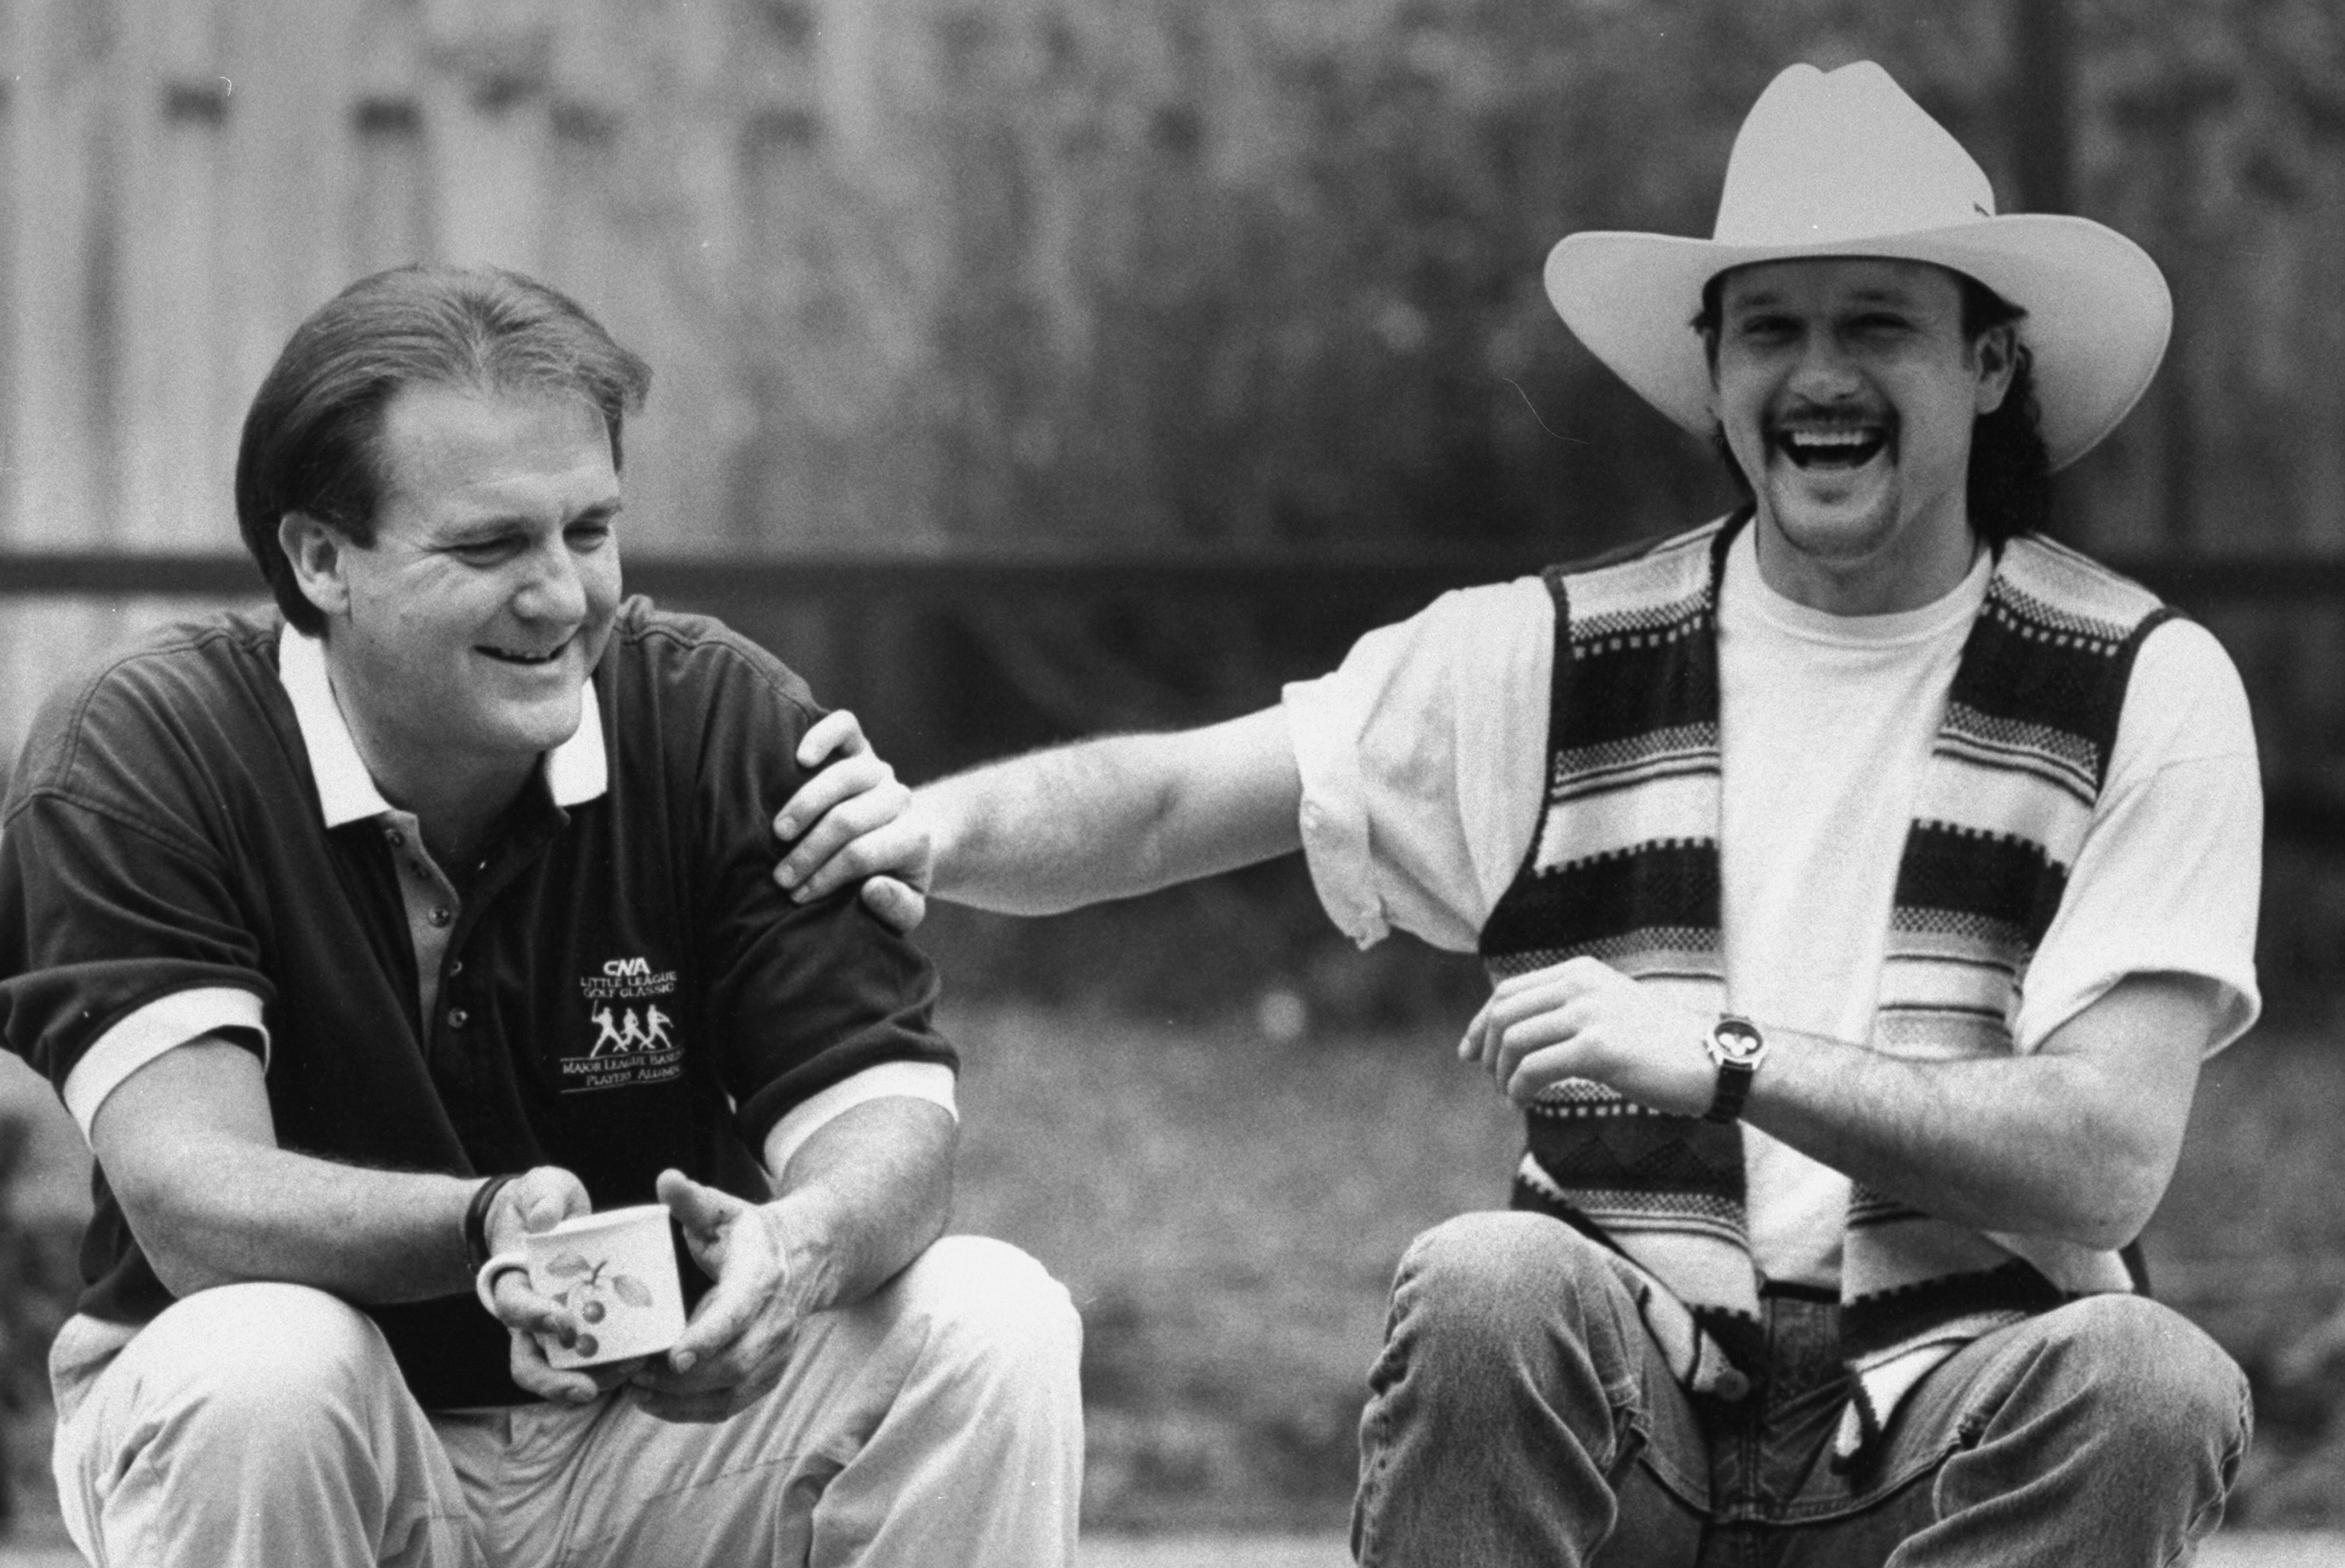 Tug McGraw and Tim McGraw circa 1994 | Source: Getty Images